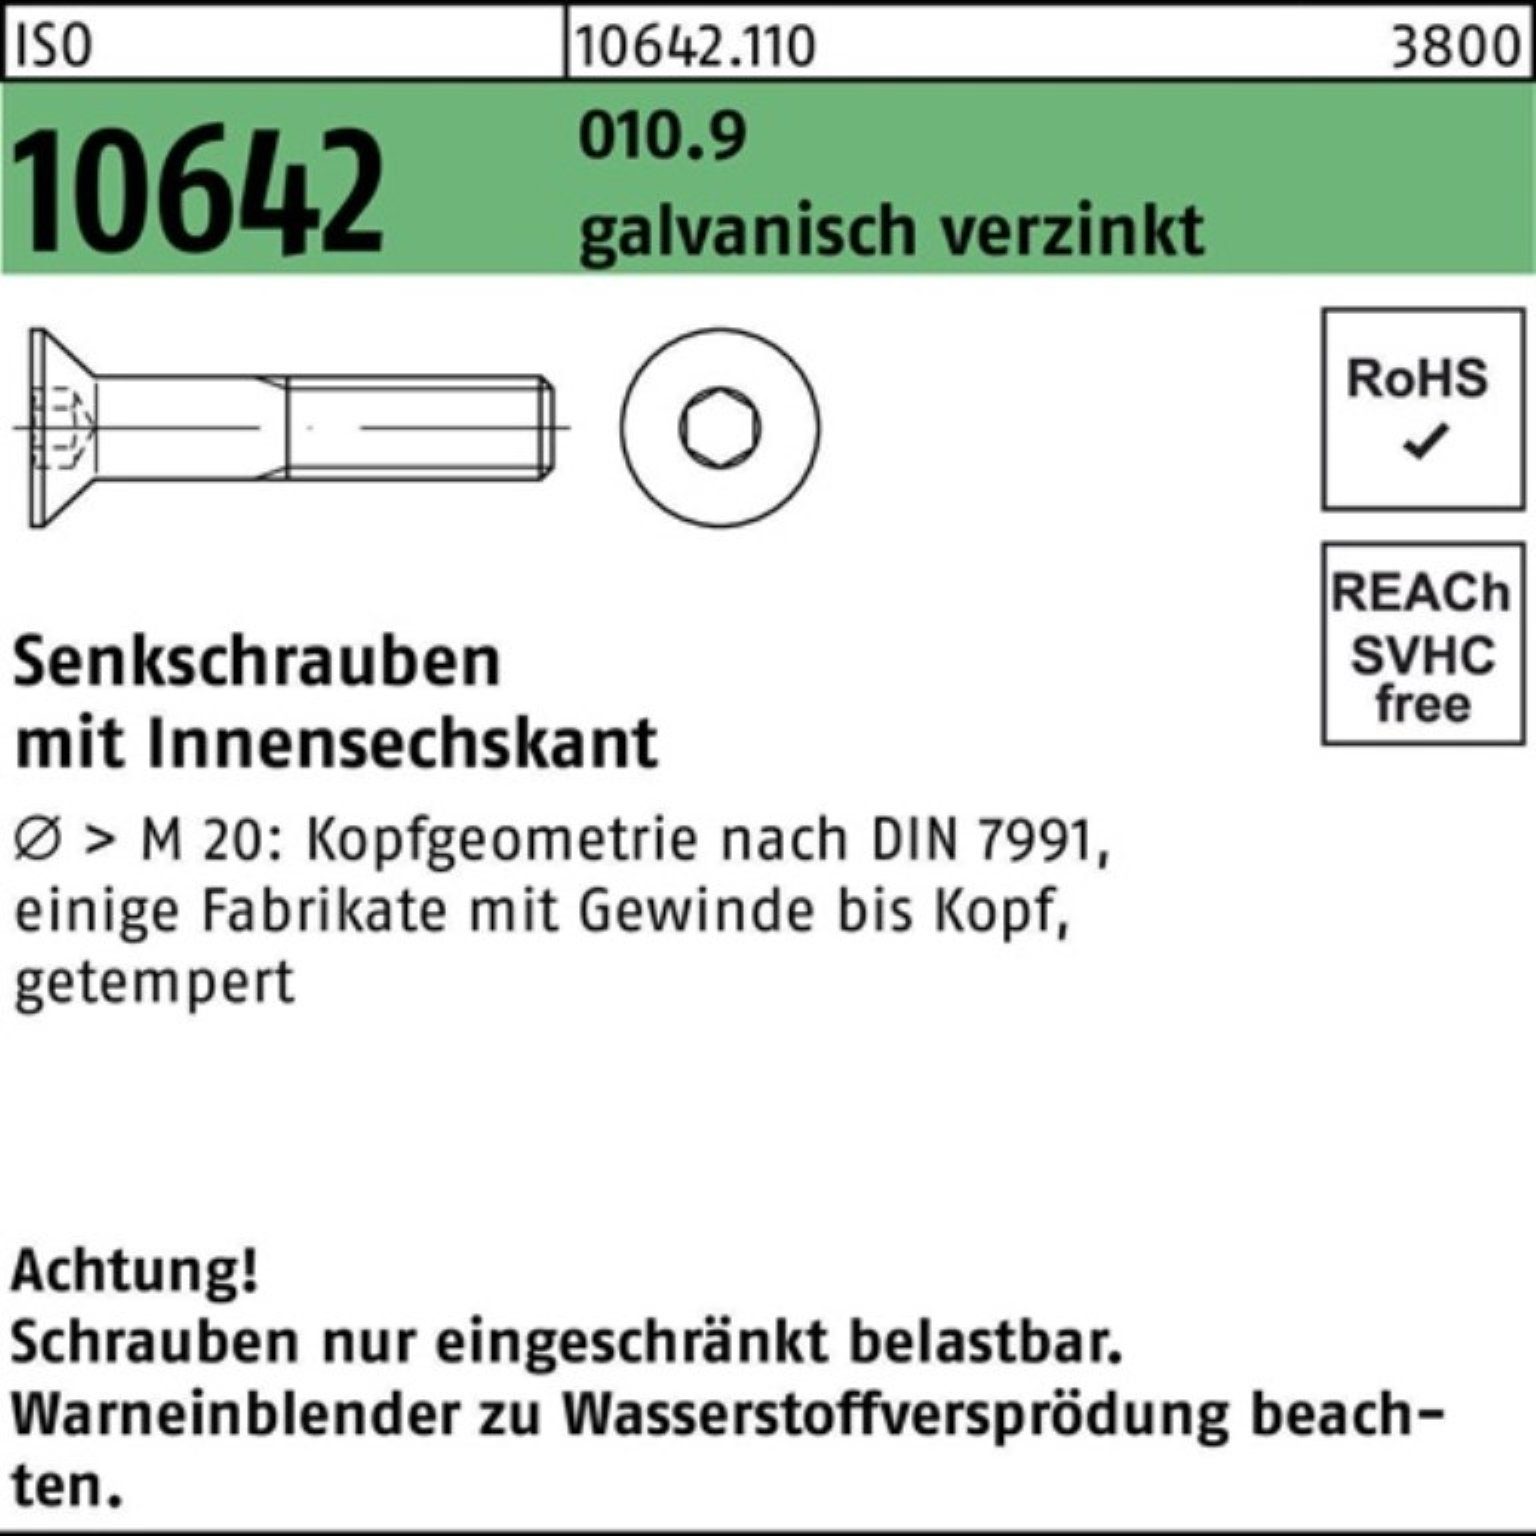 40 Pack Senkschraube 200er ISO Innen-6kt galv.verz. Senkschraube Reyher 10642 20 010.9 M6x